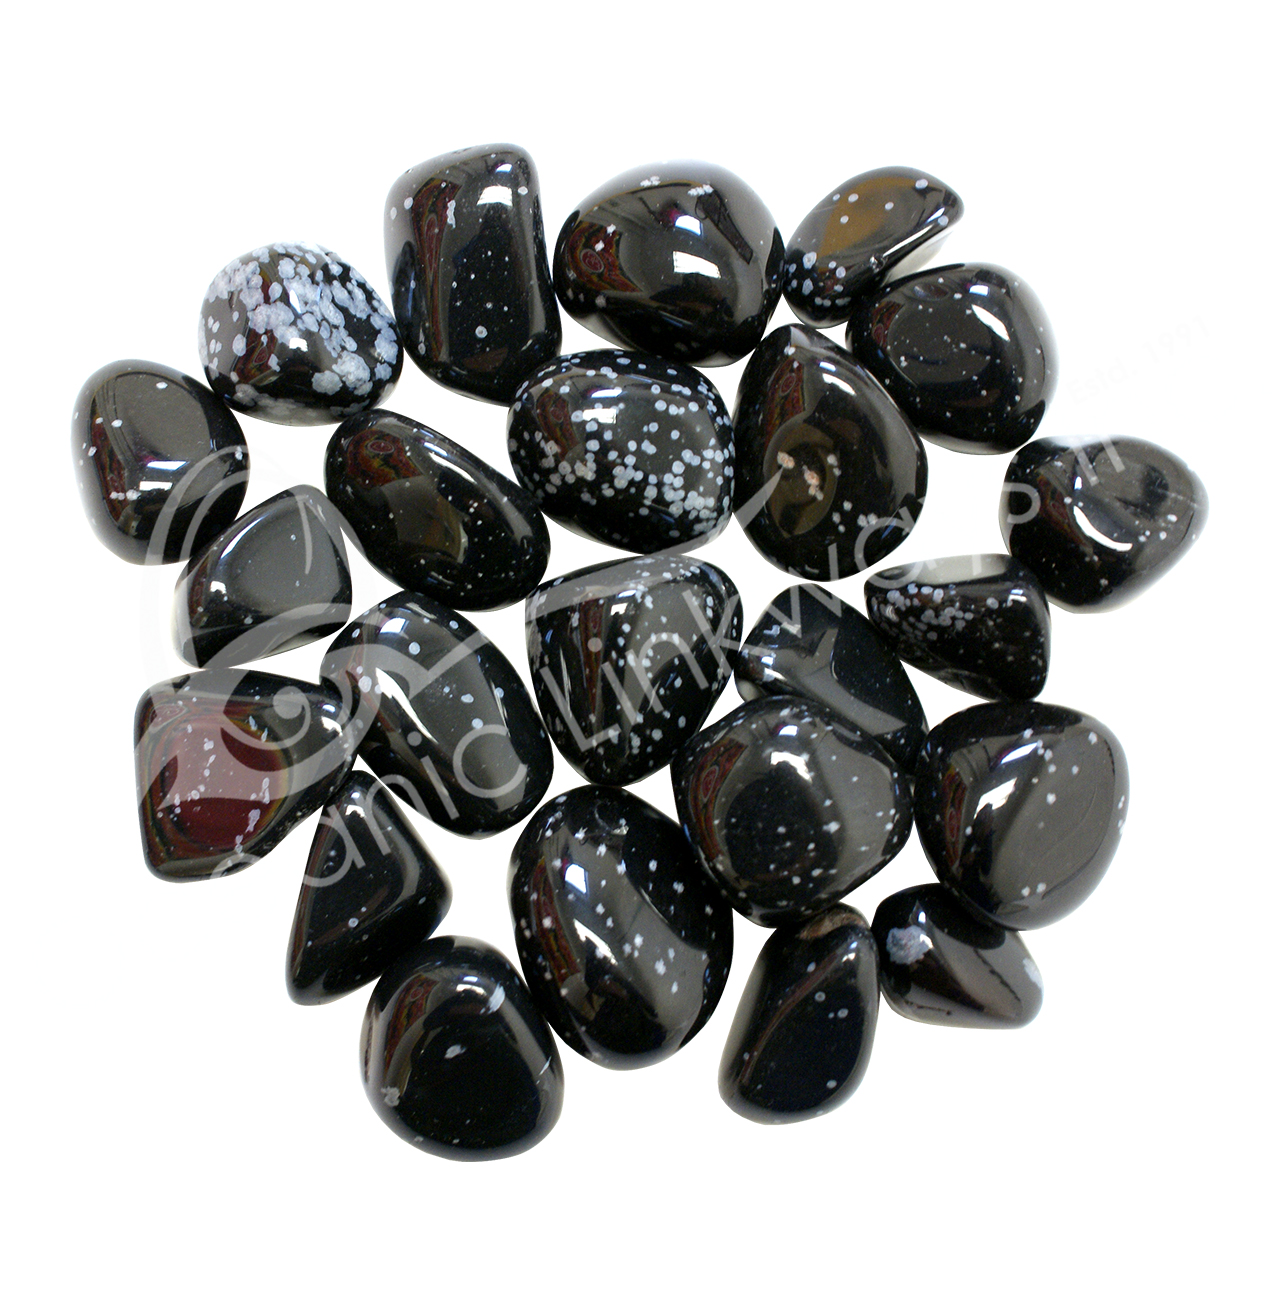 obsidian stones